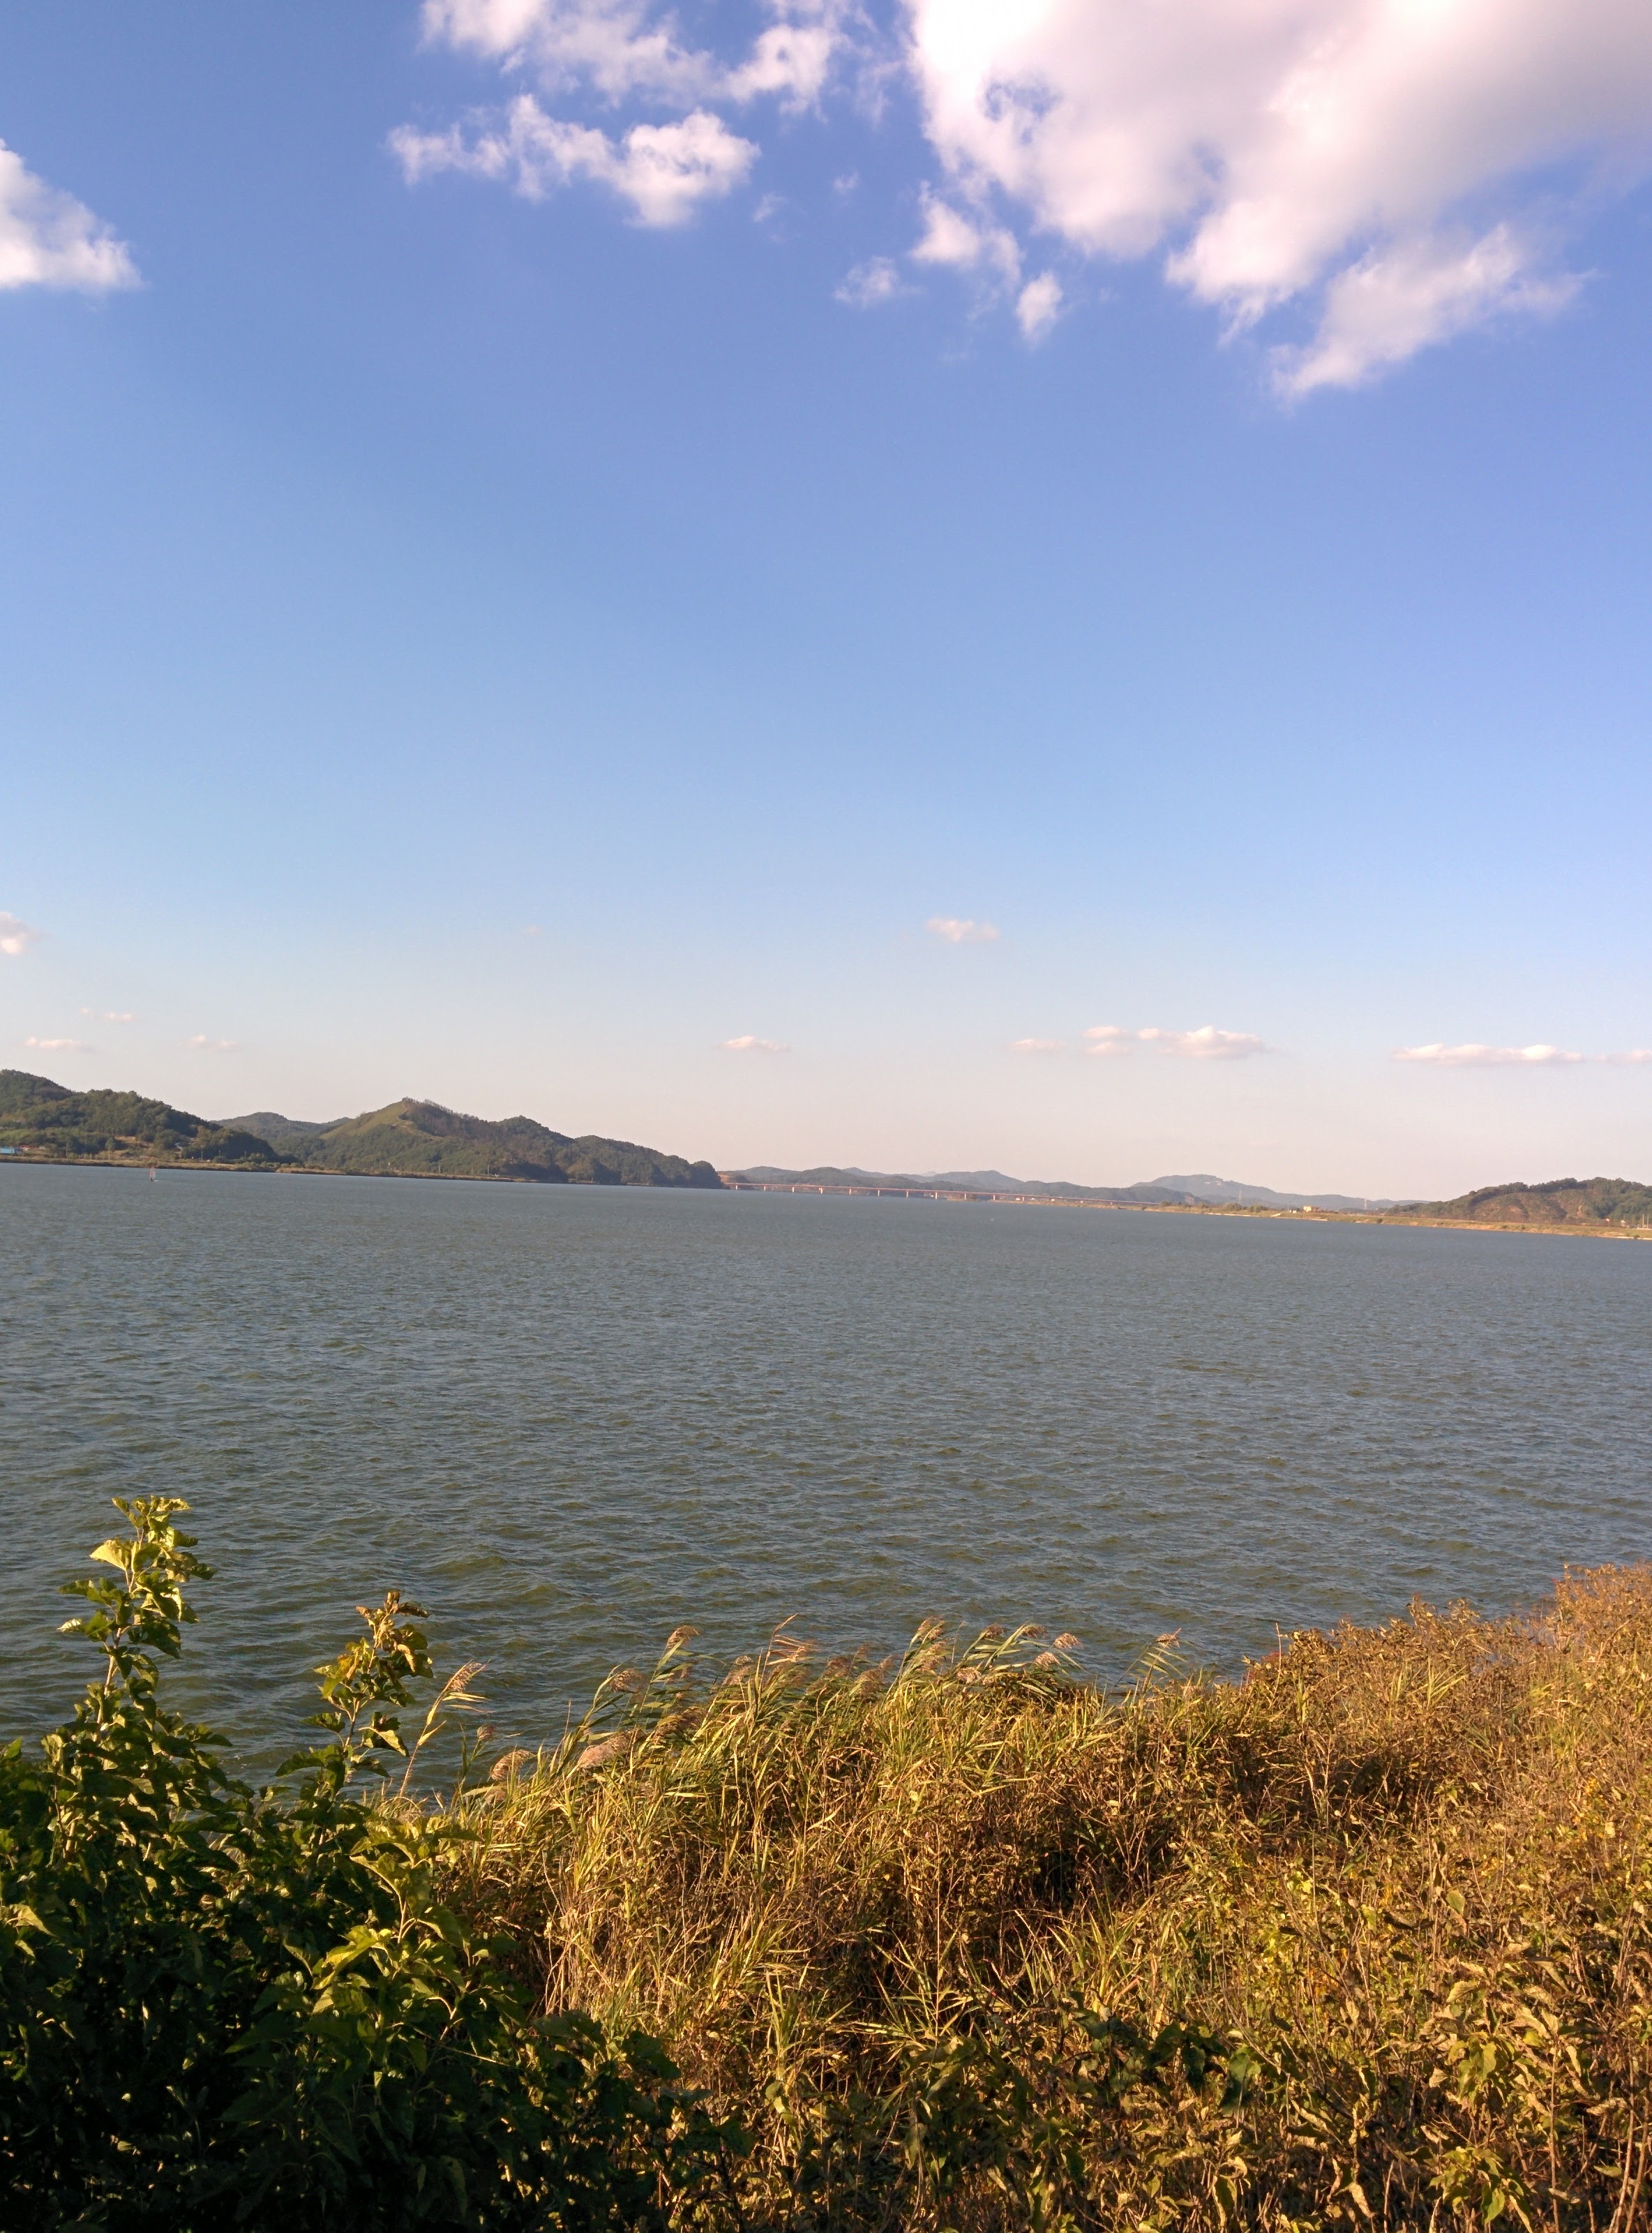 IMG_20151009_162138.jpg 익산 웅포관광지 곰개나루의 금강 풍경